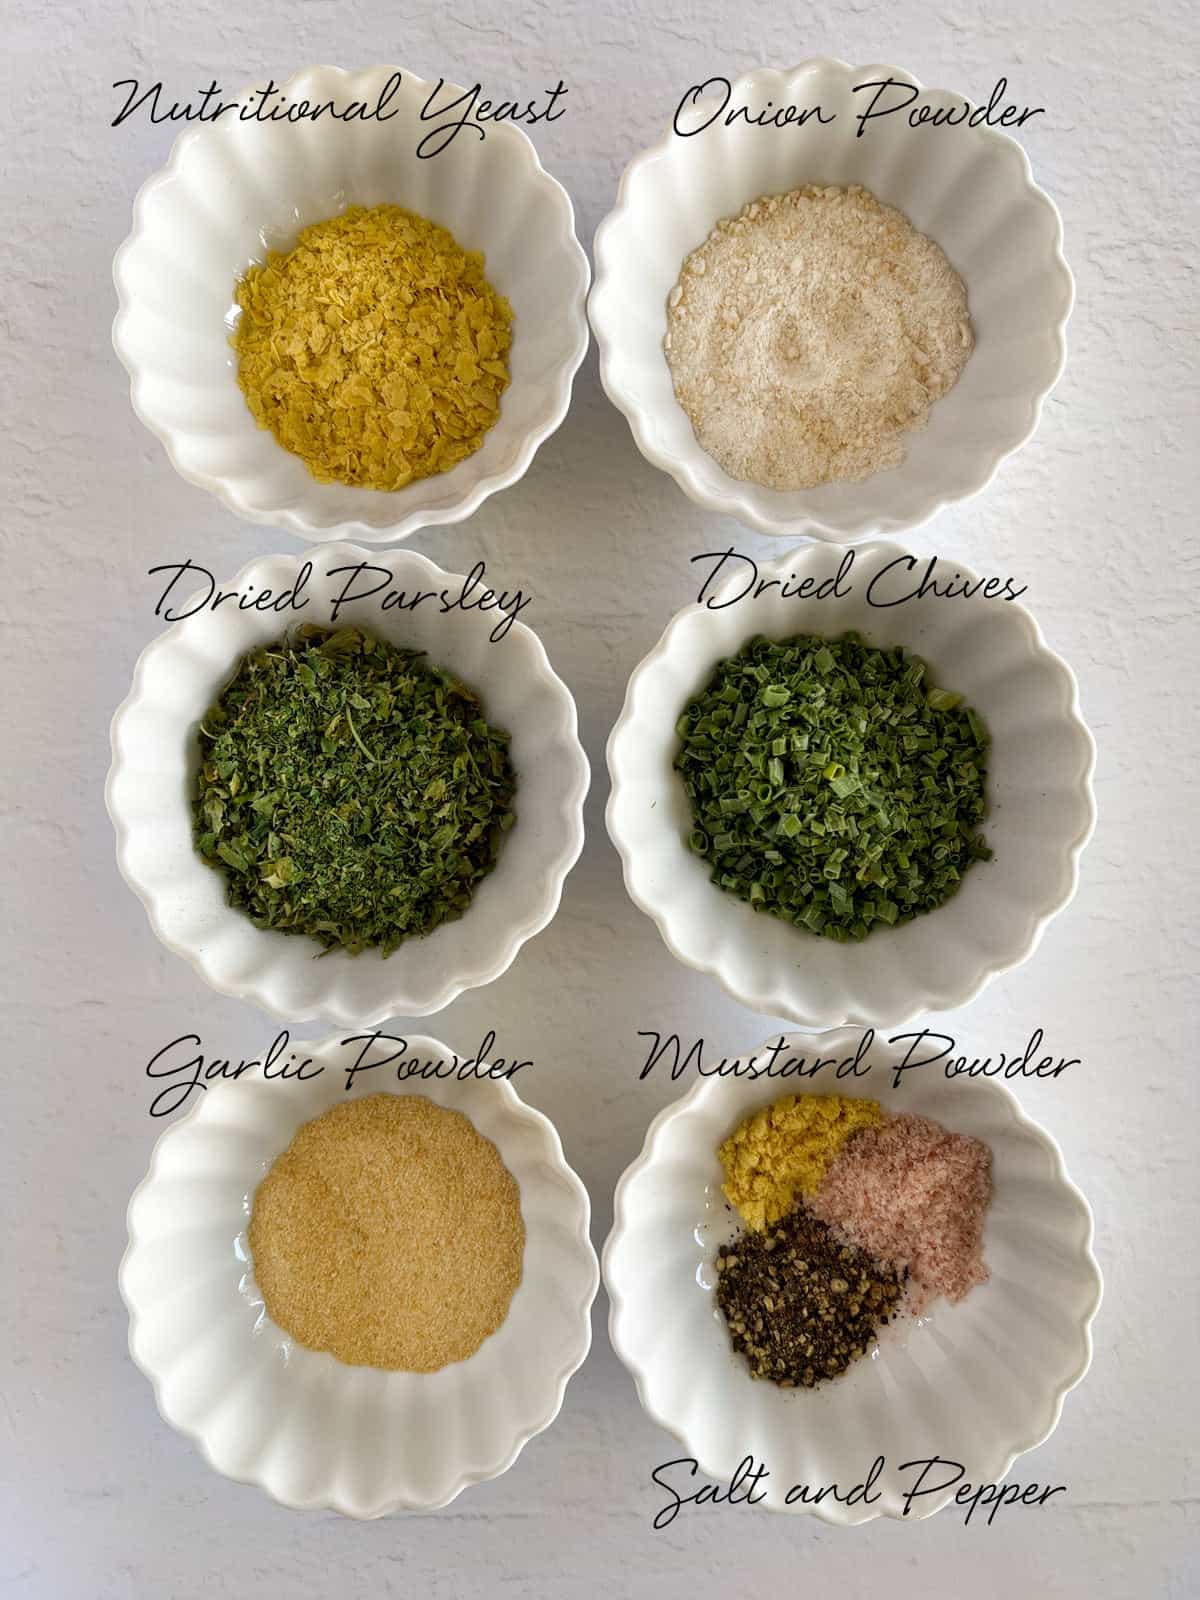 6 bowls containing nutritional yeast, onion powder, dried chives, dried parsley, garlic powder, mustard powder, salt and pepper